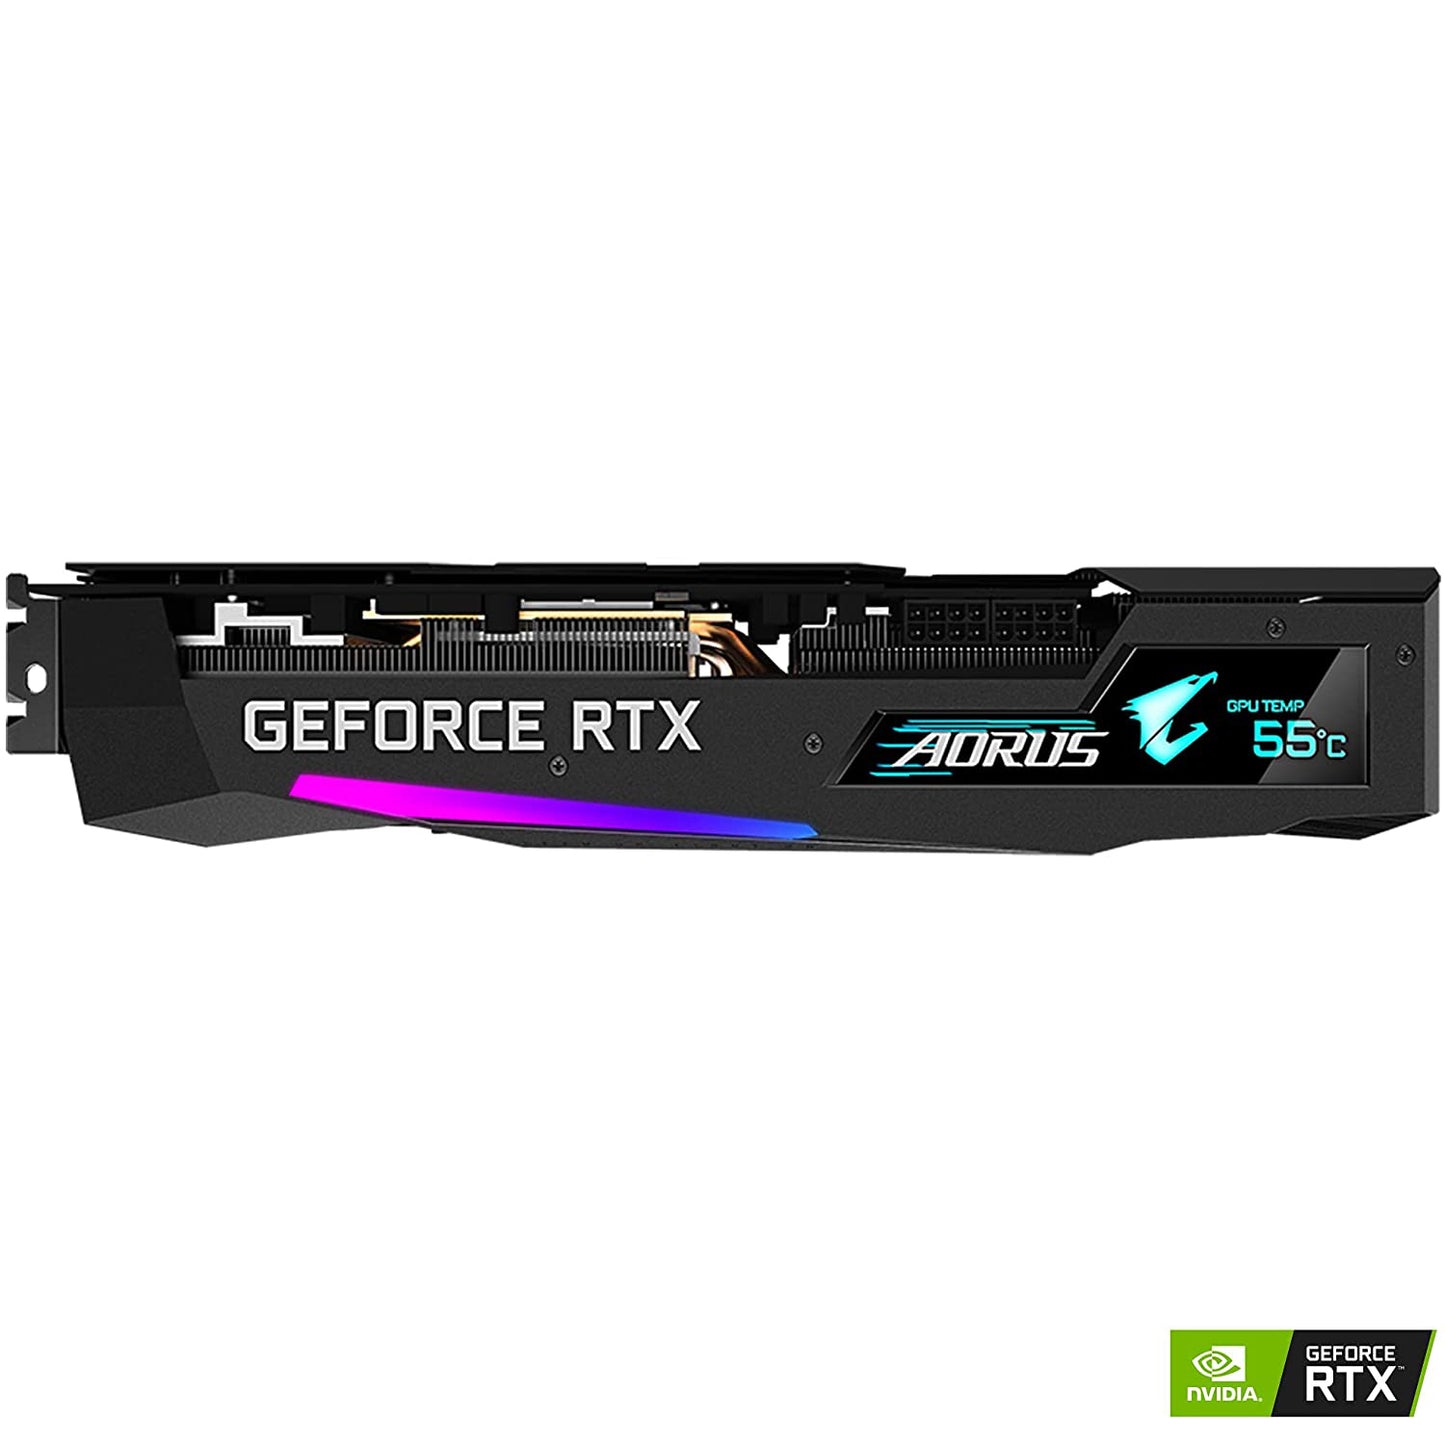 Gigabyte GeForce RTX 3070 Aorus Master 8GB OC GPU